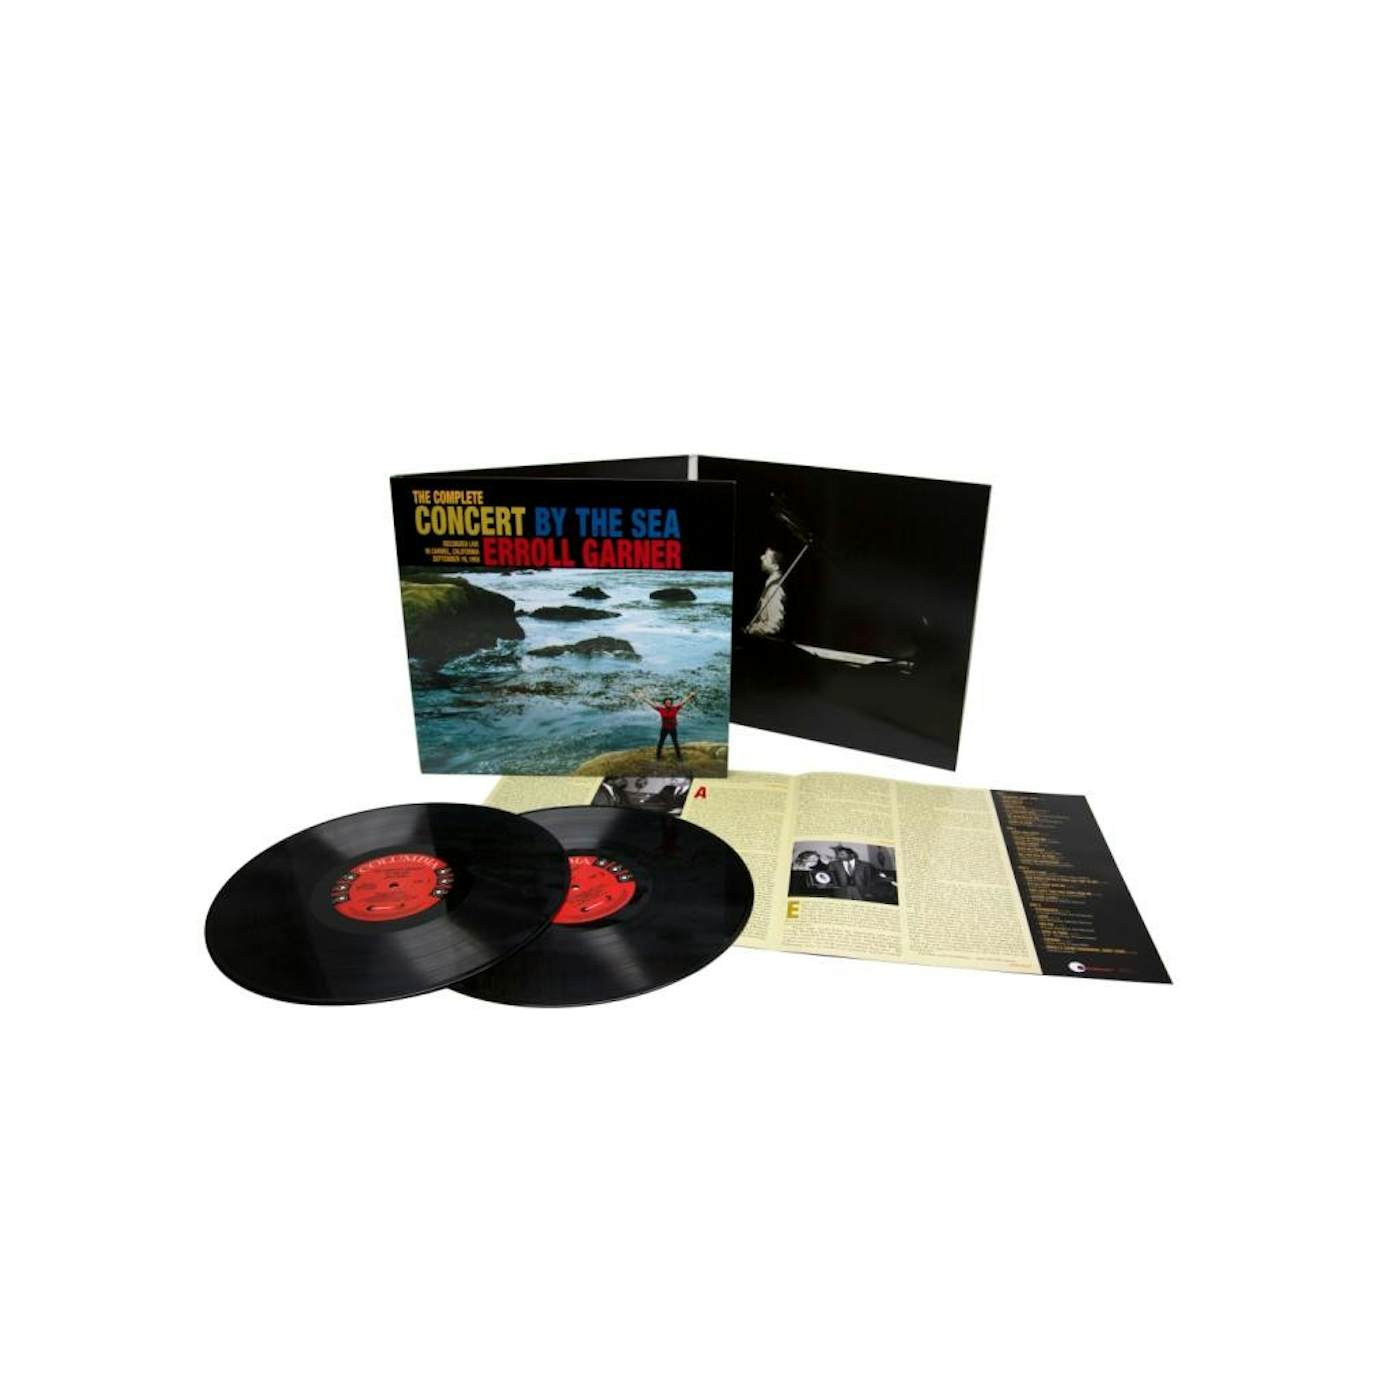 Erroll Garner COMPLETE CONCERT BY THE SEA Vinyl Record